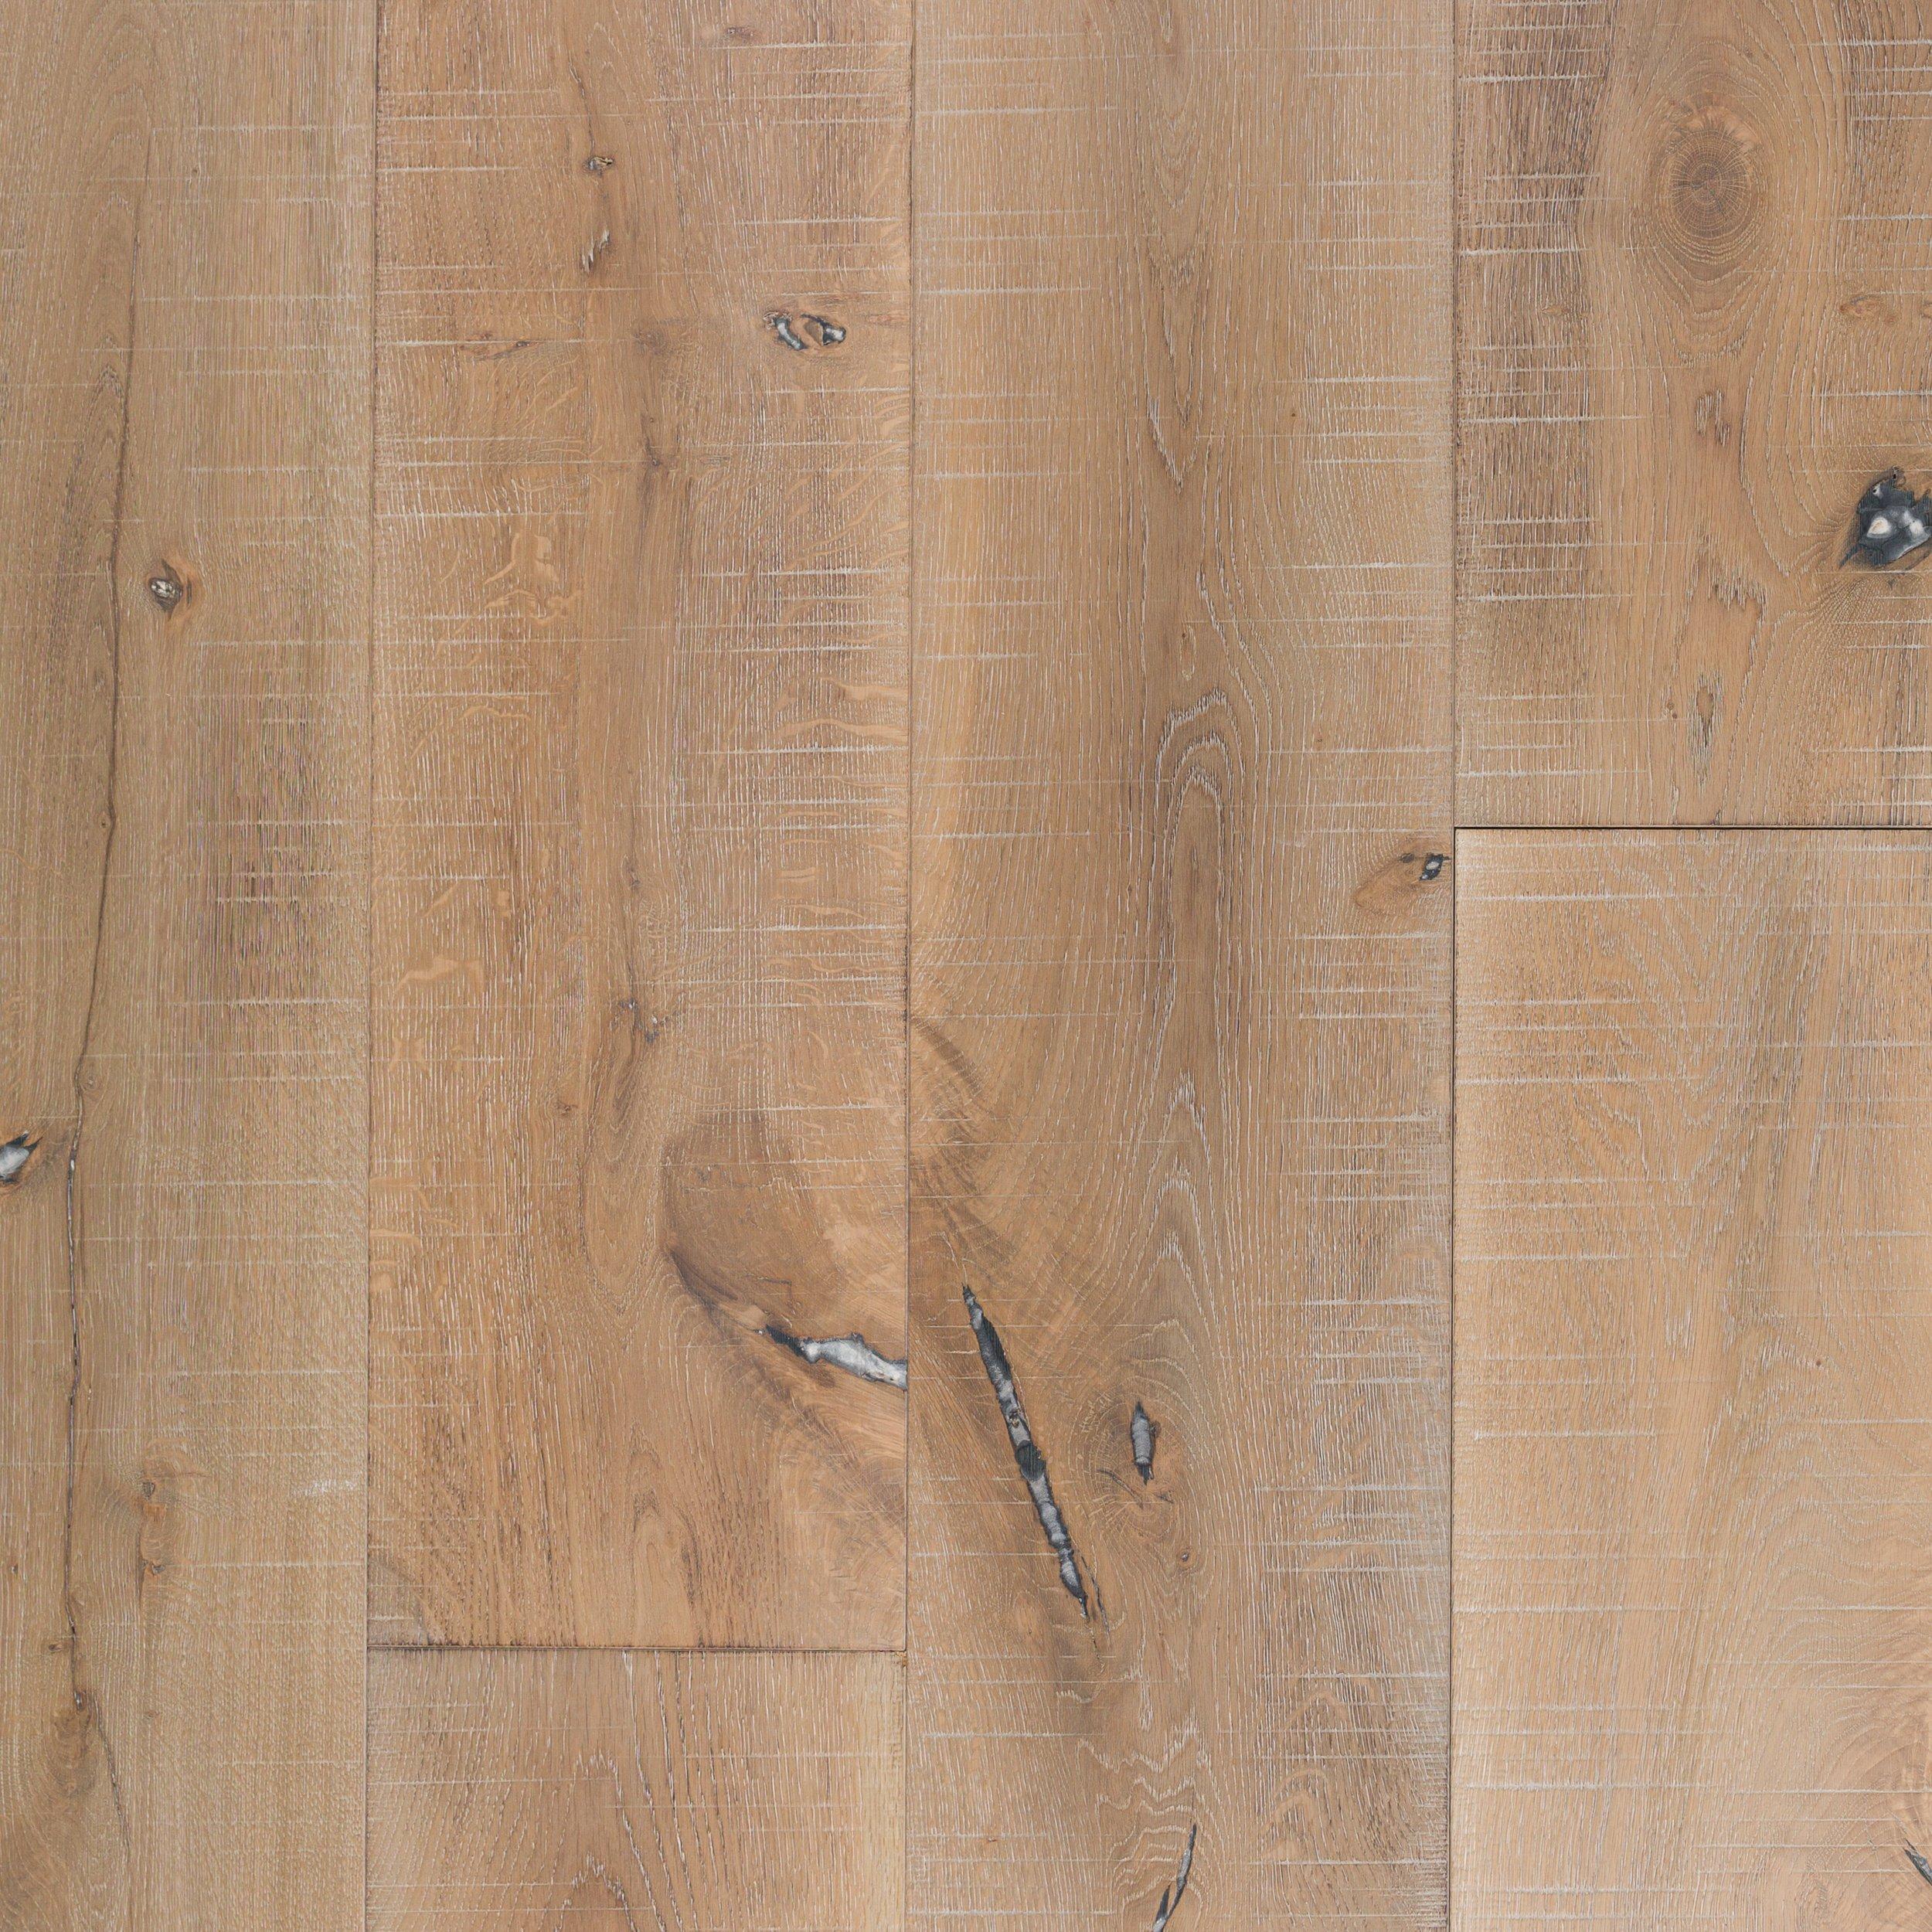 European Oak Rustic Distressed, Long Plank Engineered Hardwood Flooring